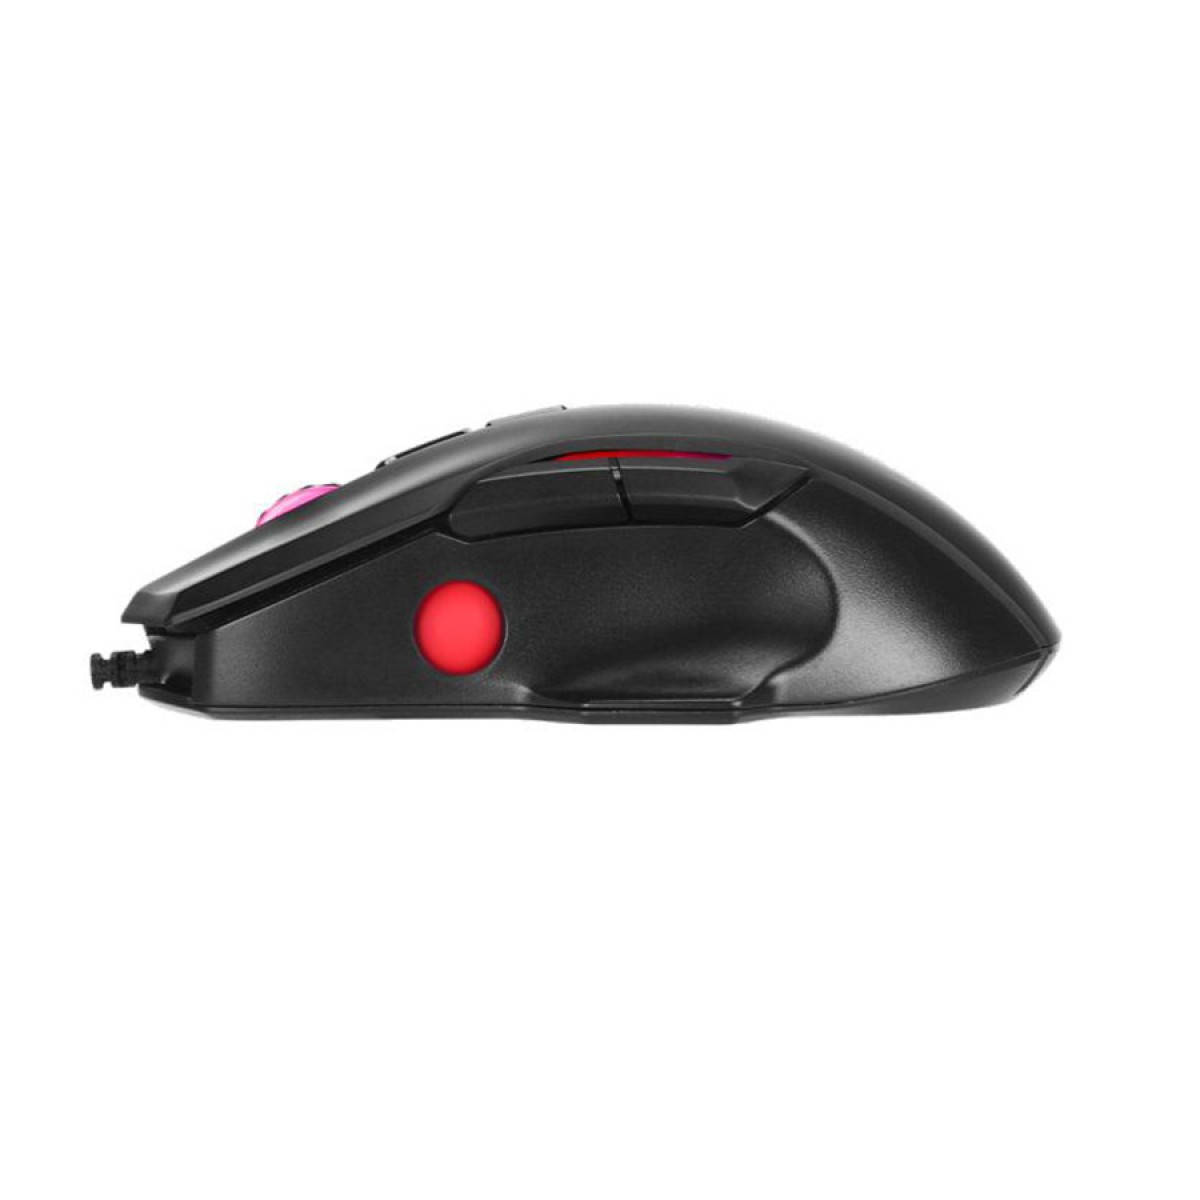 Mouse Gamer Marvo G945, 10000 DPI, 9 Botões, RGB, Black